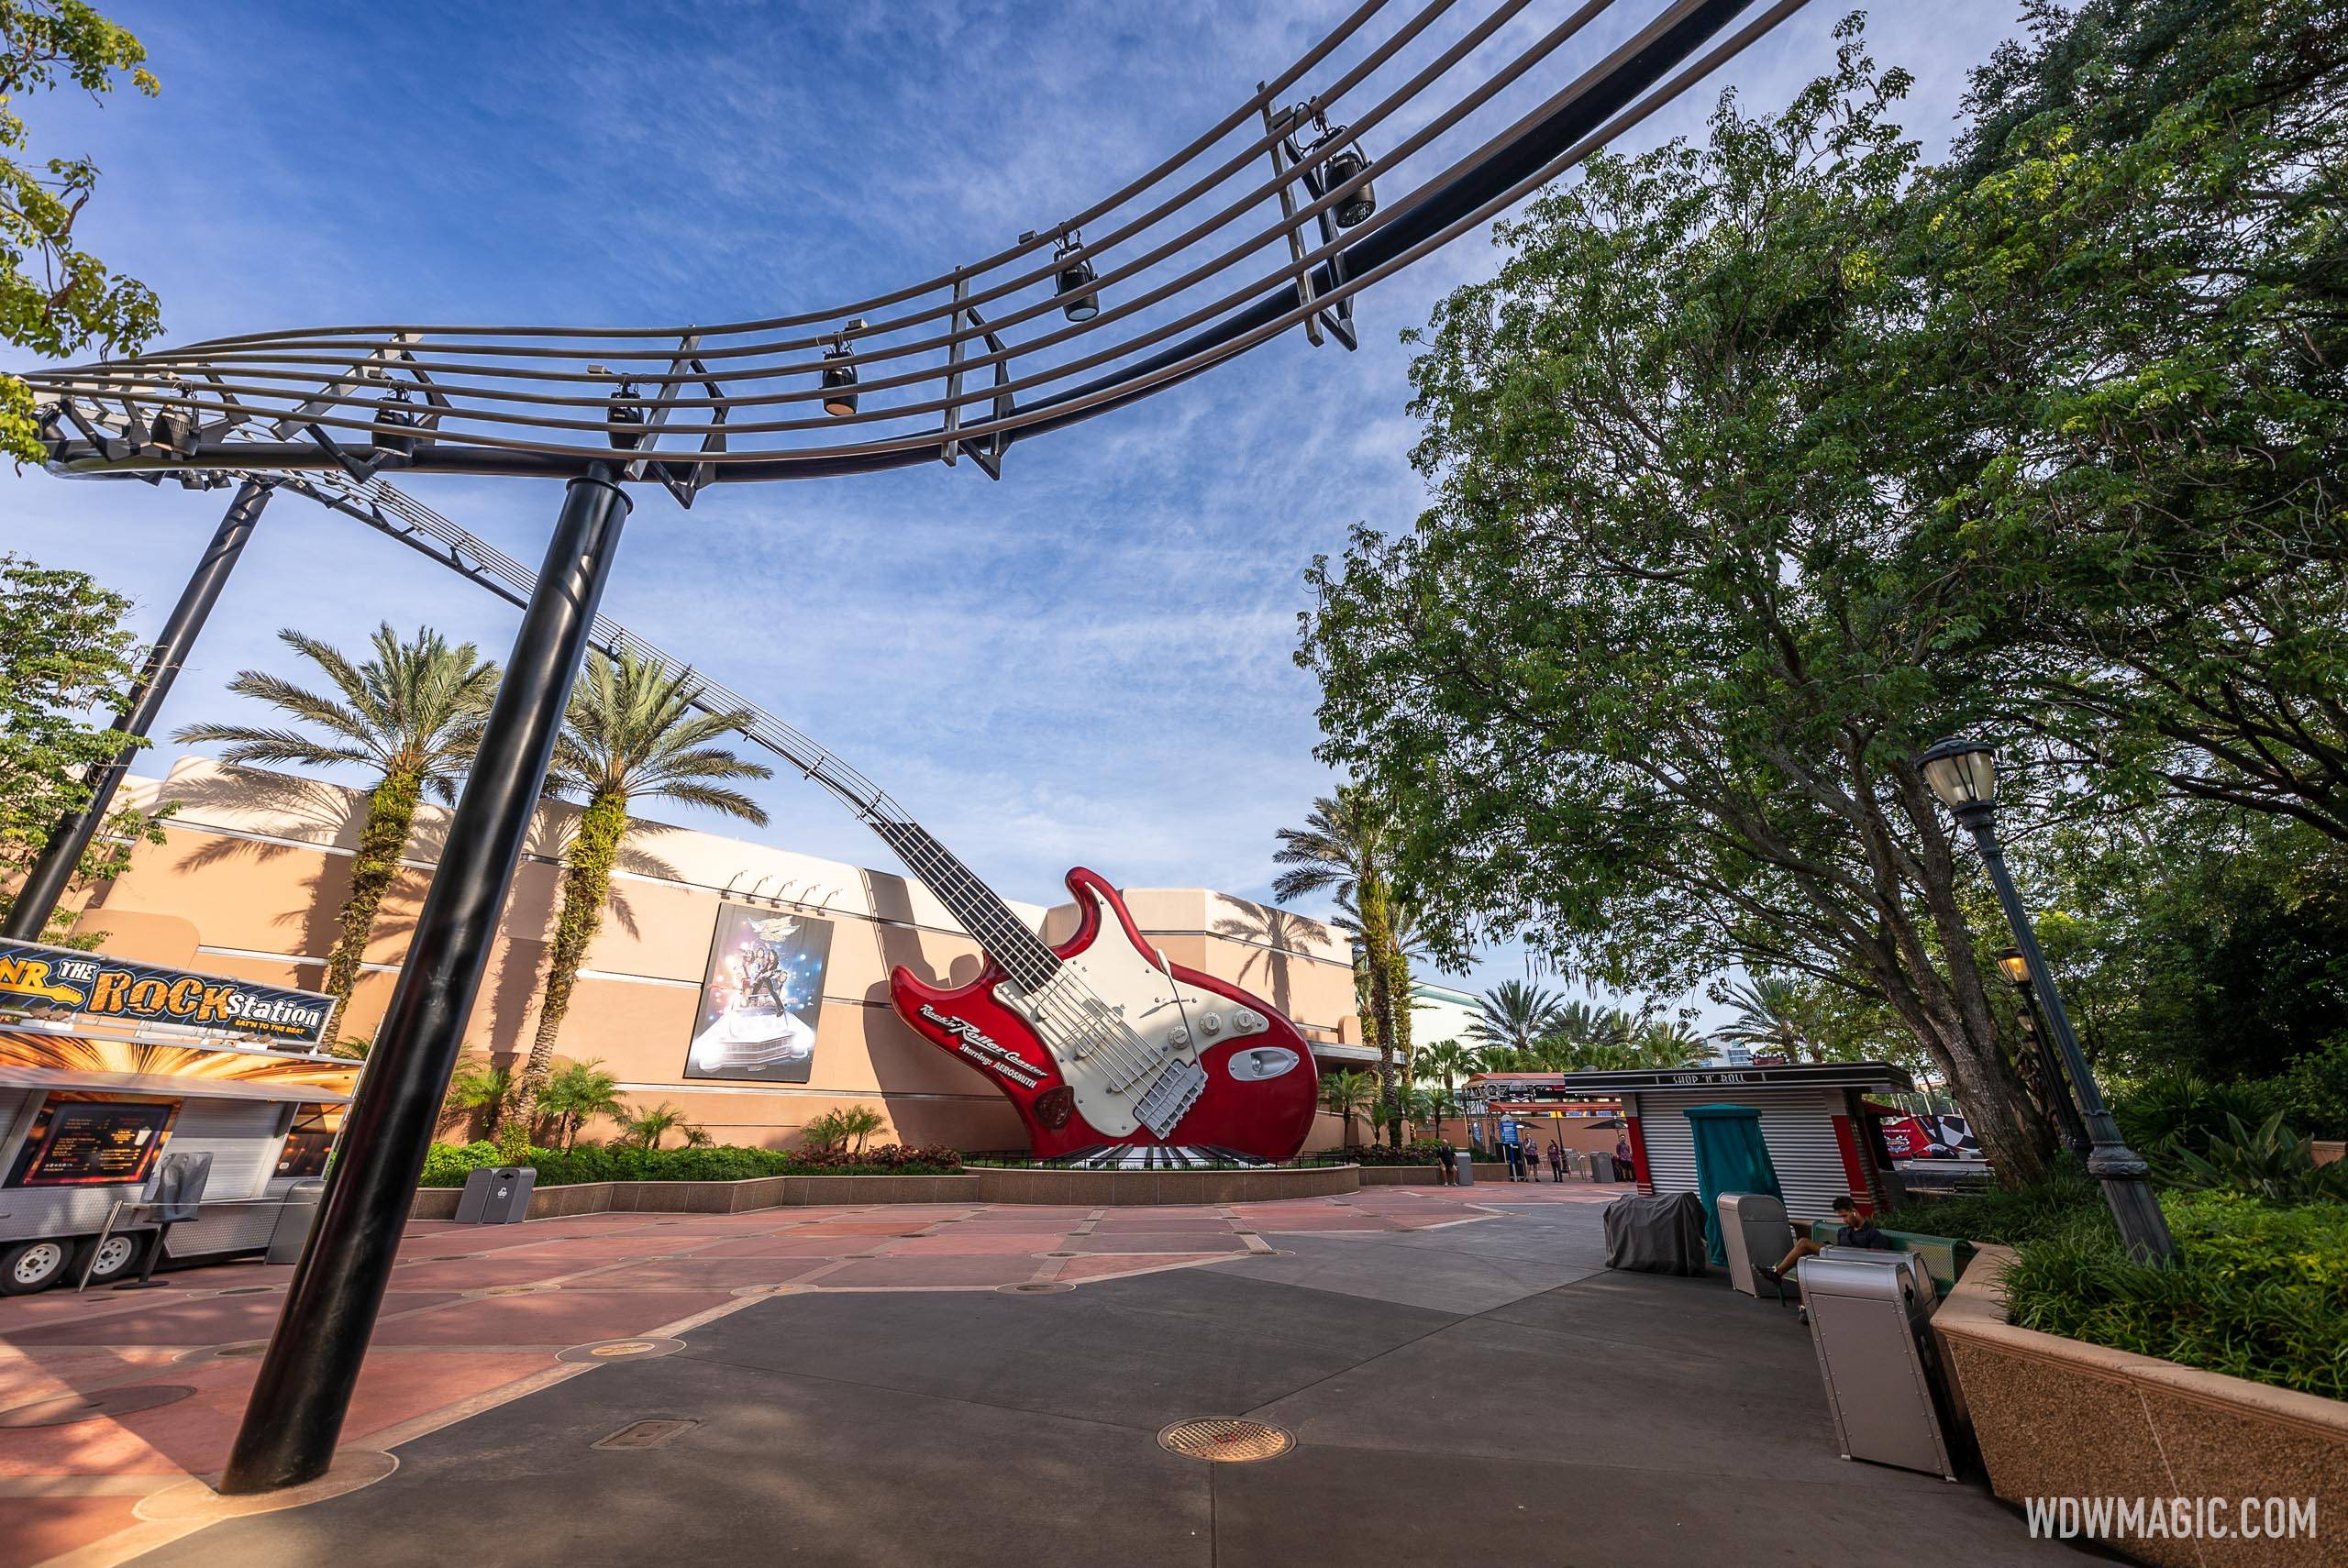 AEROSMITH - Disney's Hollywood Studios Closes Down Rock 'N' Roller Coaster  For Refurbishment - BraveWords